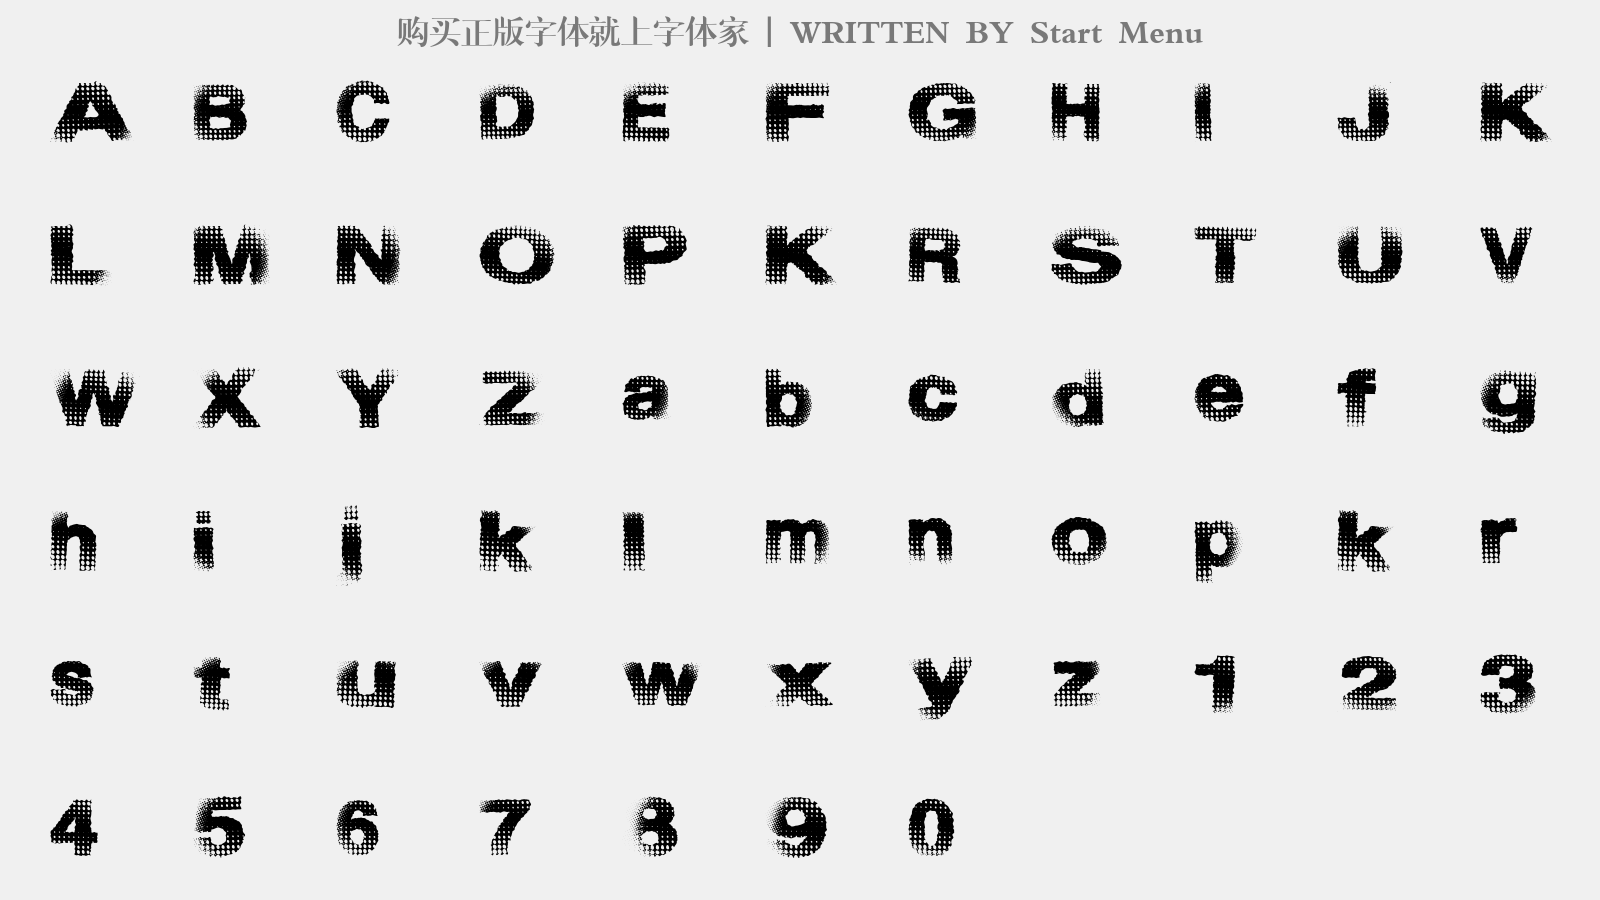 Start Menu - 大写字母/小写字母/数字